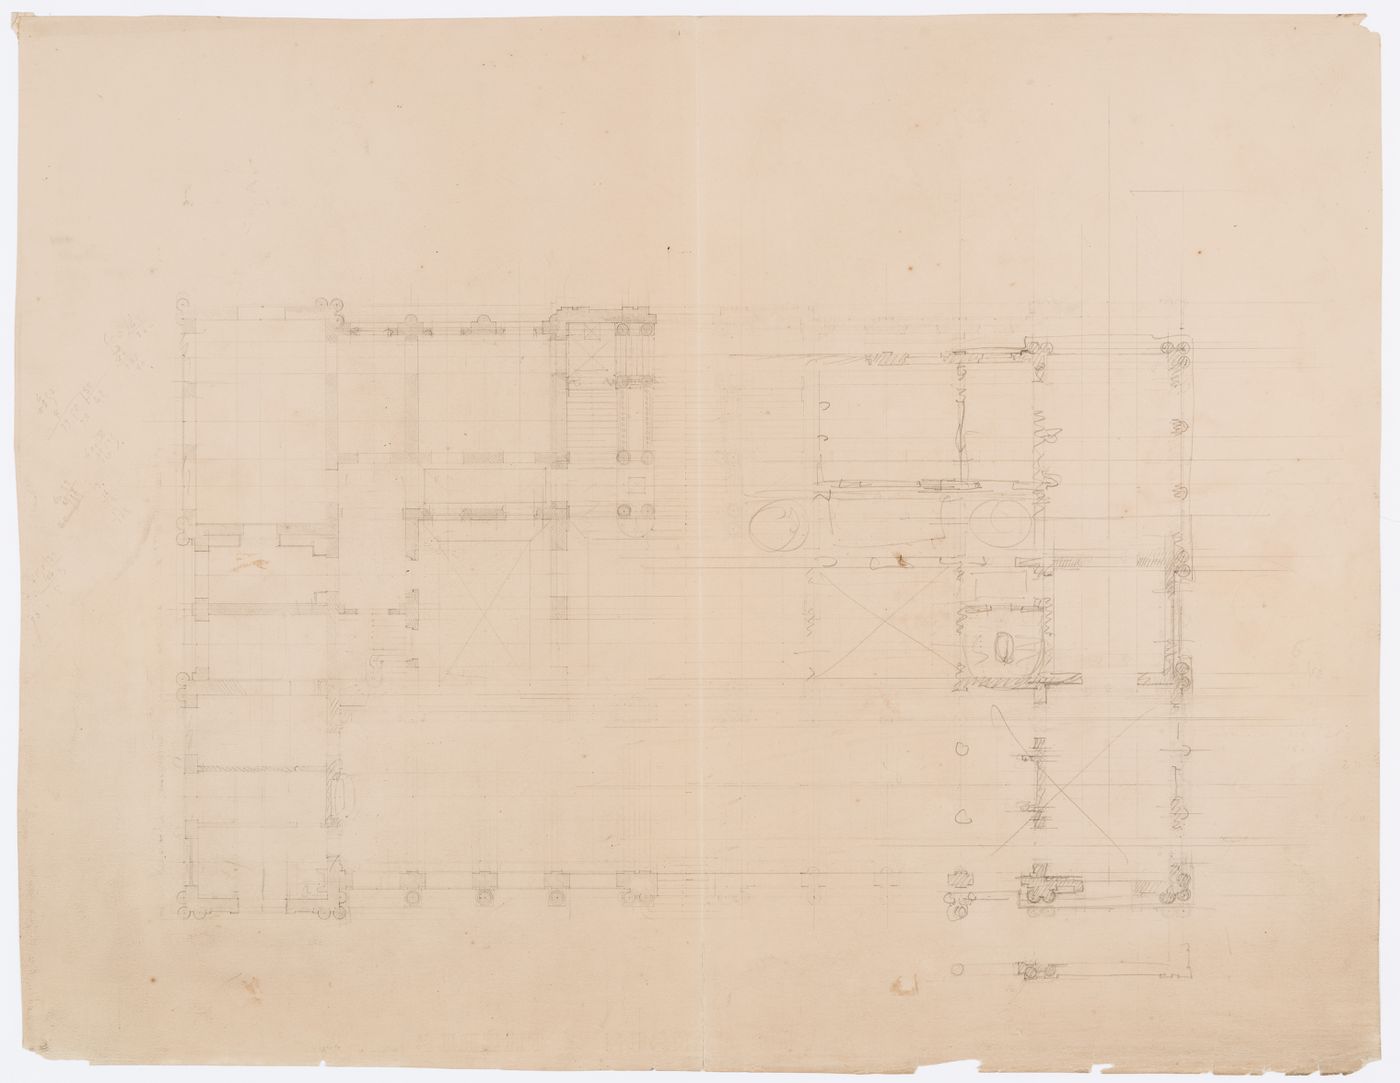 Project for a Hôtel de ville, Poitiers: First floor plan